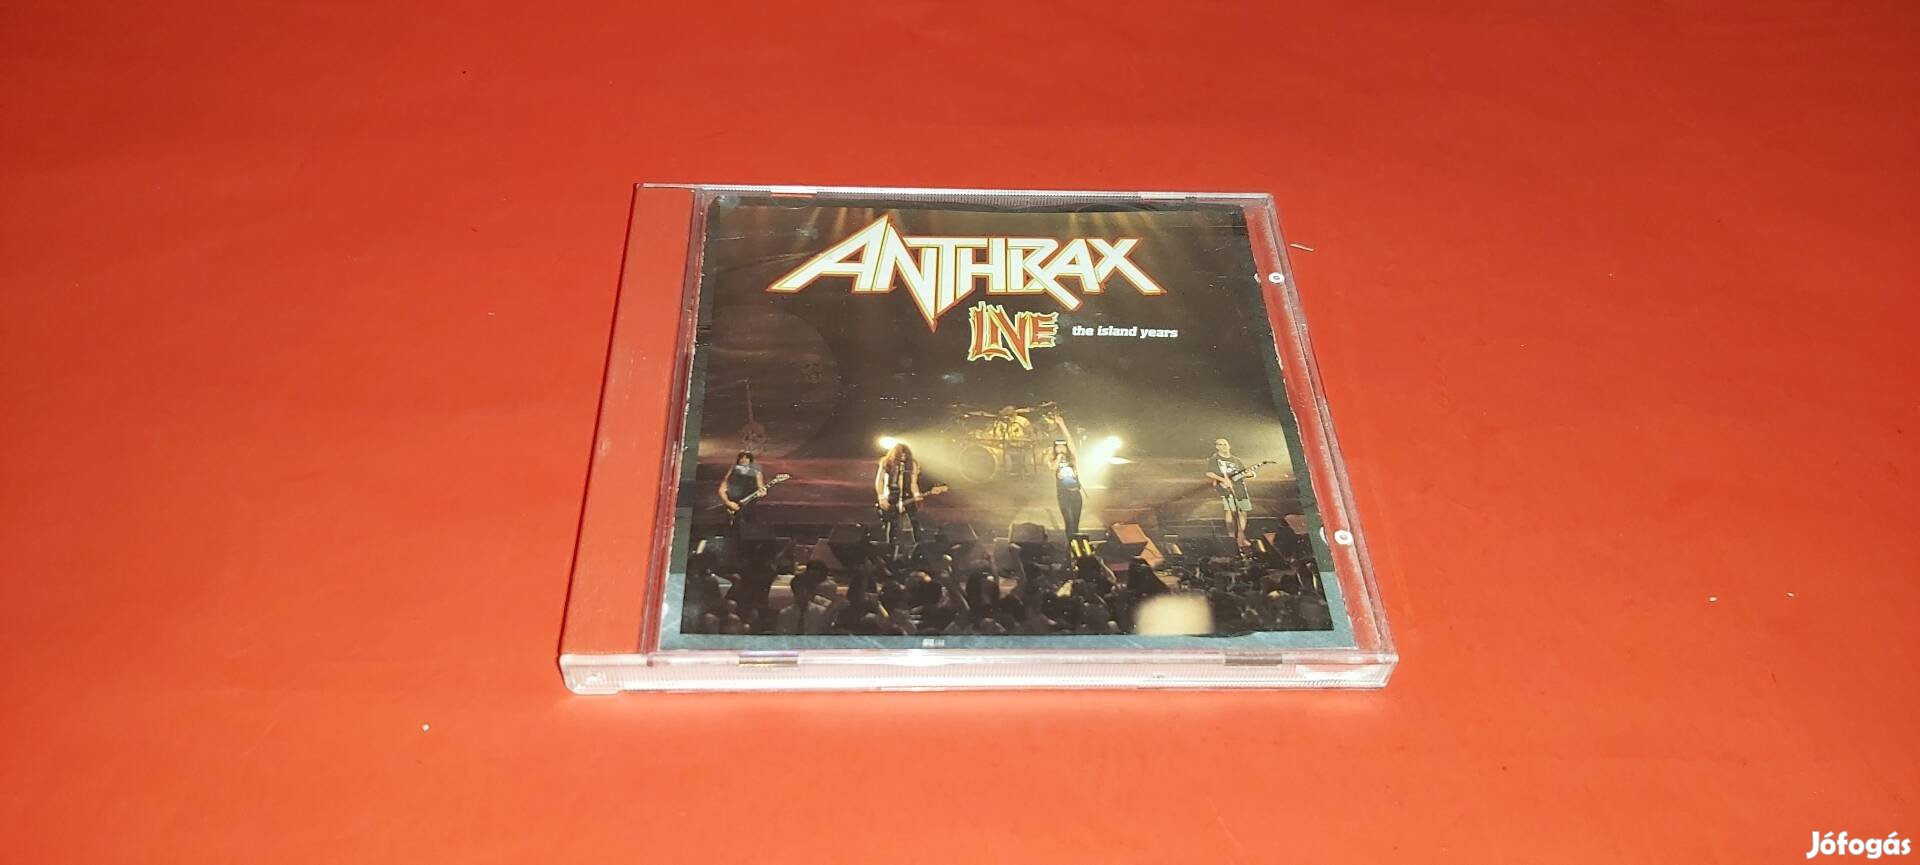 Anthrax Live the island years Cd 1994